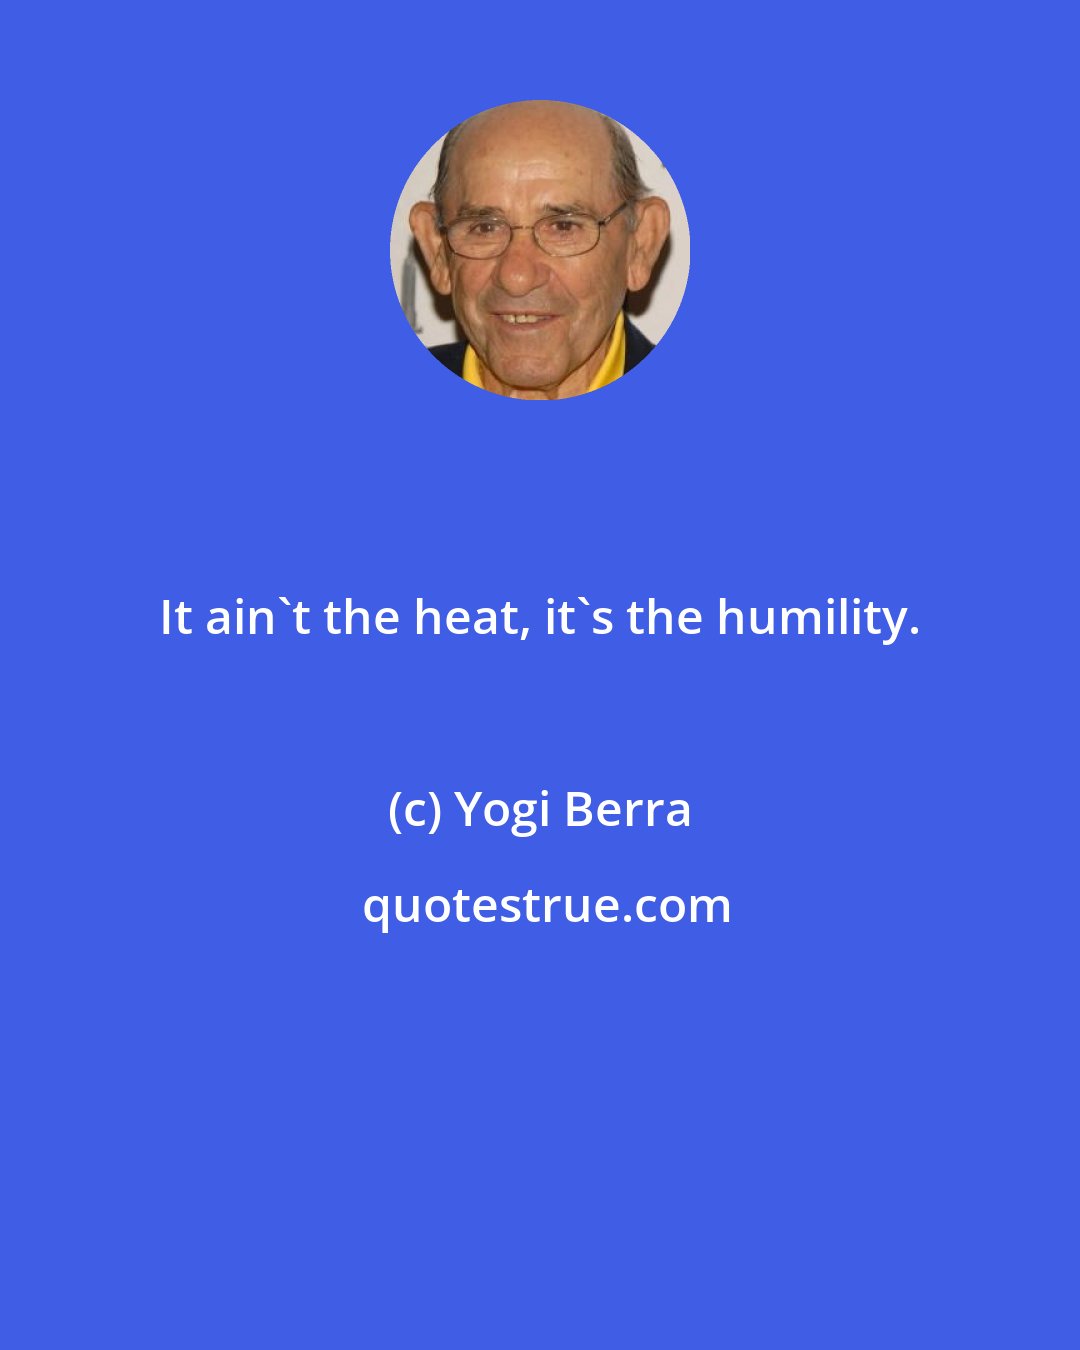 Yogi Berra: It ain't the heat, it's the humility.